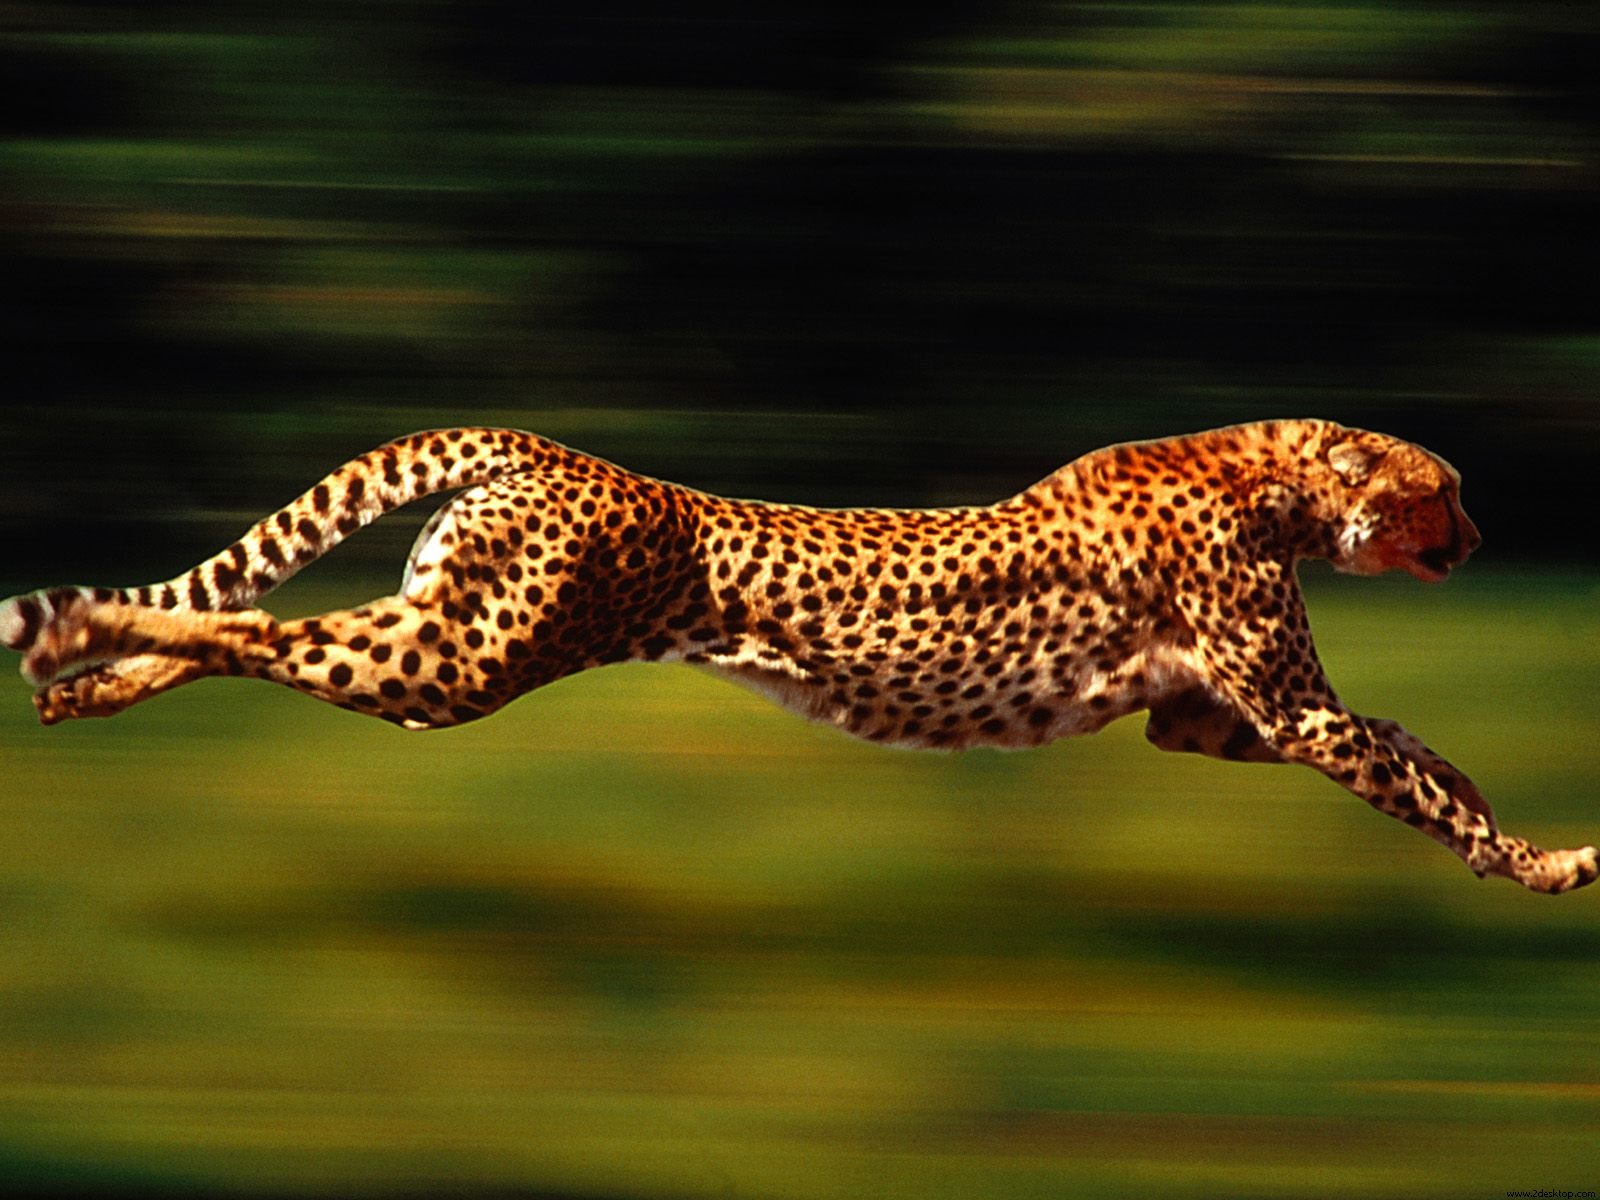 https://blogger.googleusercontent.com/img/b/R29vZ2xl/AVvXsEiUxcvZVMiQZj_DwSvSewlM4g2dwaaES9qn8AALJApghSbc7myo6ctGN6AmdPcSxn30E0rzIqATqzvWGDcT1xFAxBTHZb8E8AlfTOtwbZArYXsDW1ekEncwsM72QgPTZw2xm2q4tv5o6Ms/s1600/Running-cheetah-animal-wallpaper.jpg